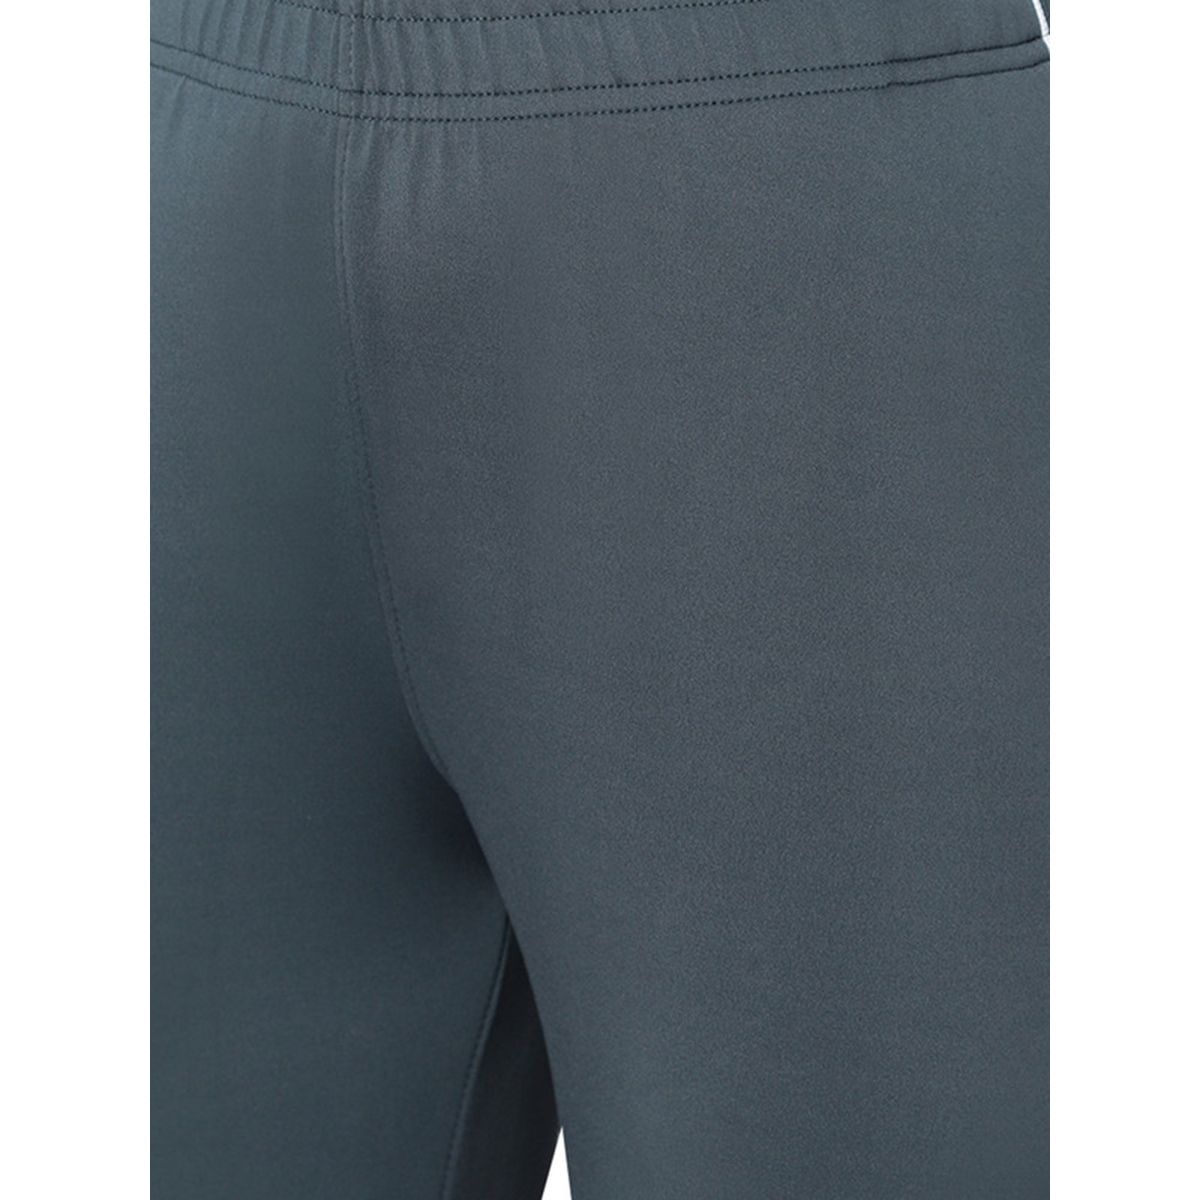 Buy Omtex Royal Athletic Track Pants for Men,Gym Track Pants Black-Navy  (Pack of 2) online